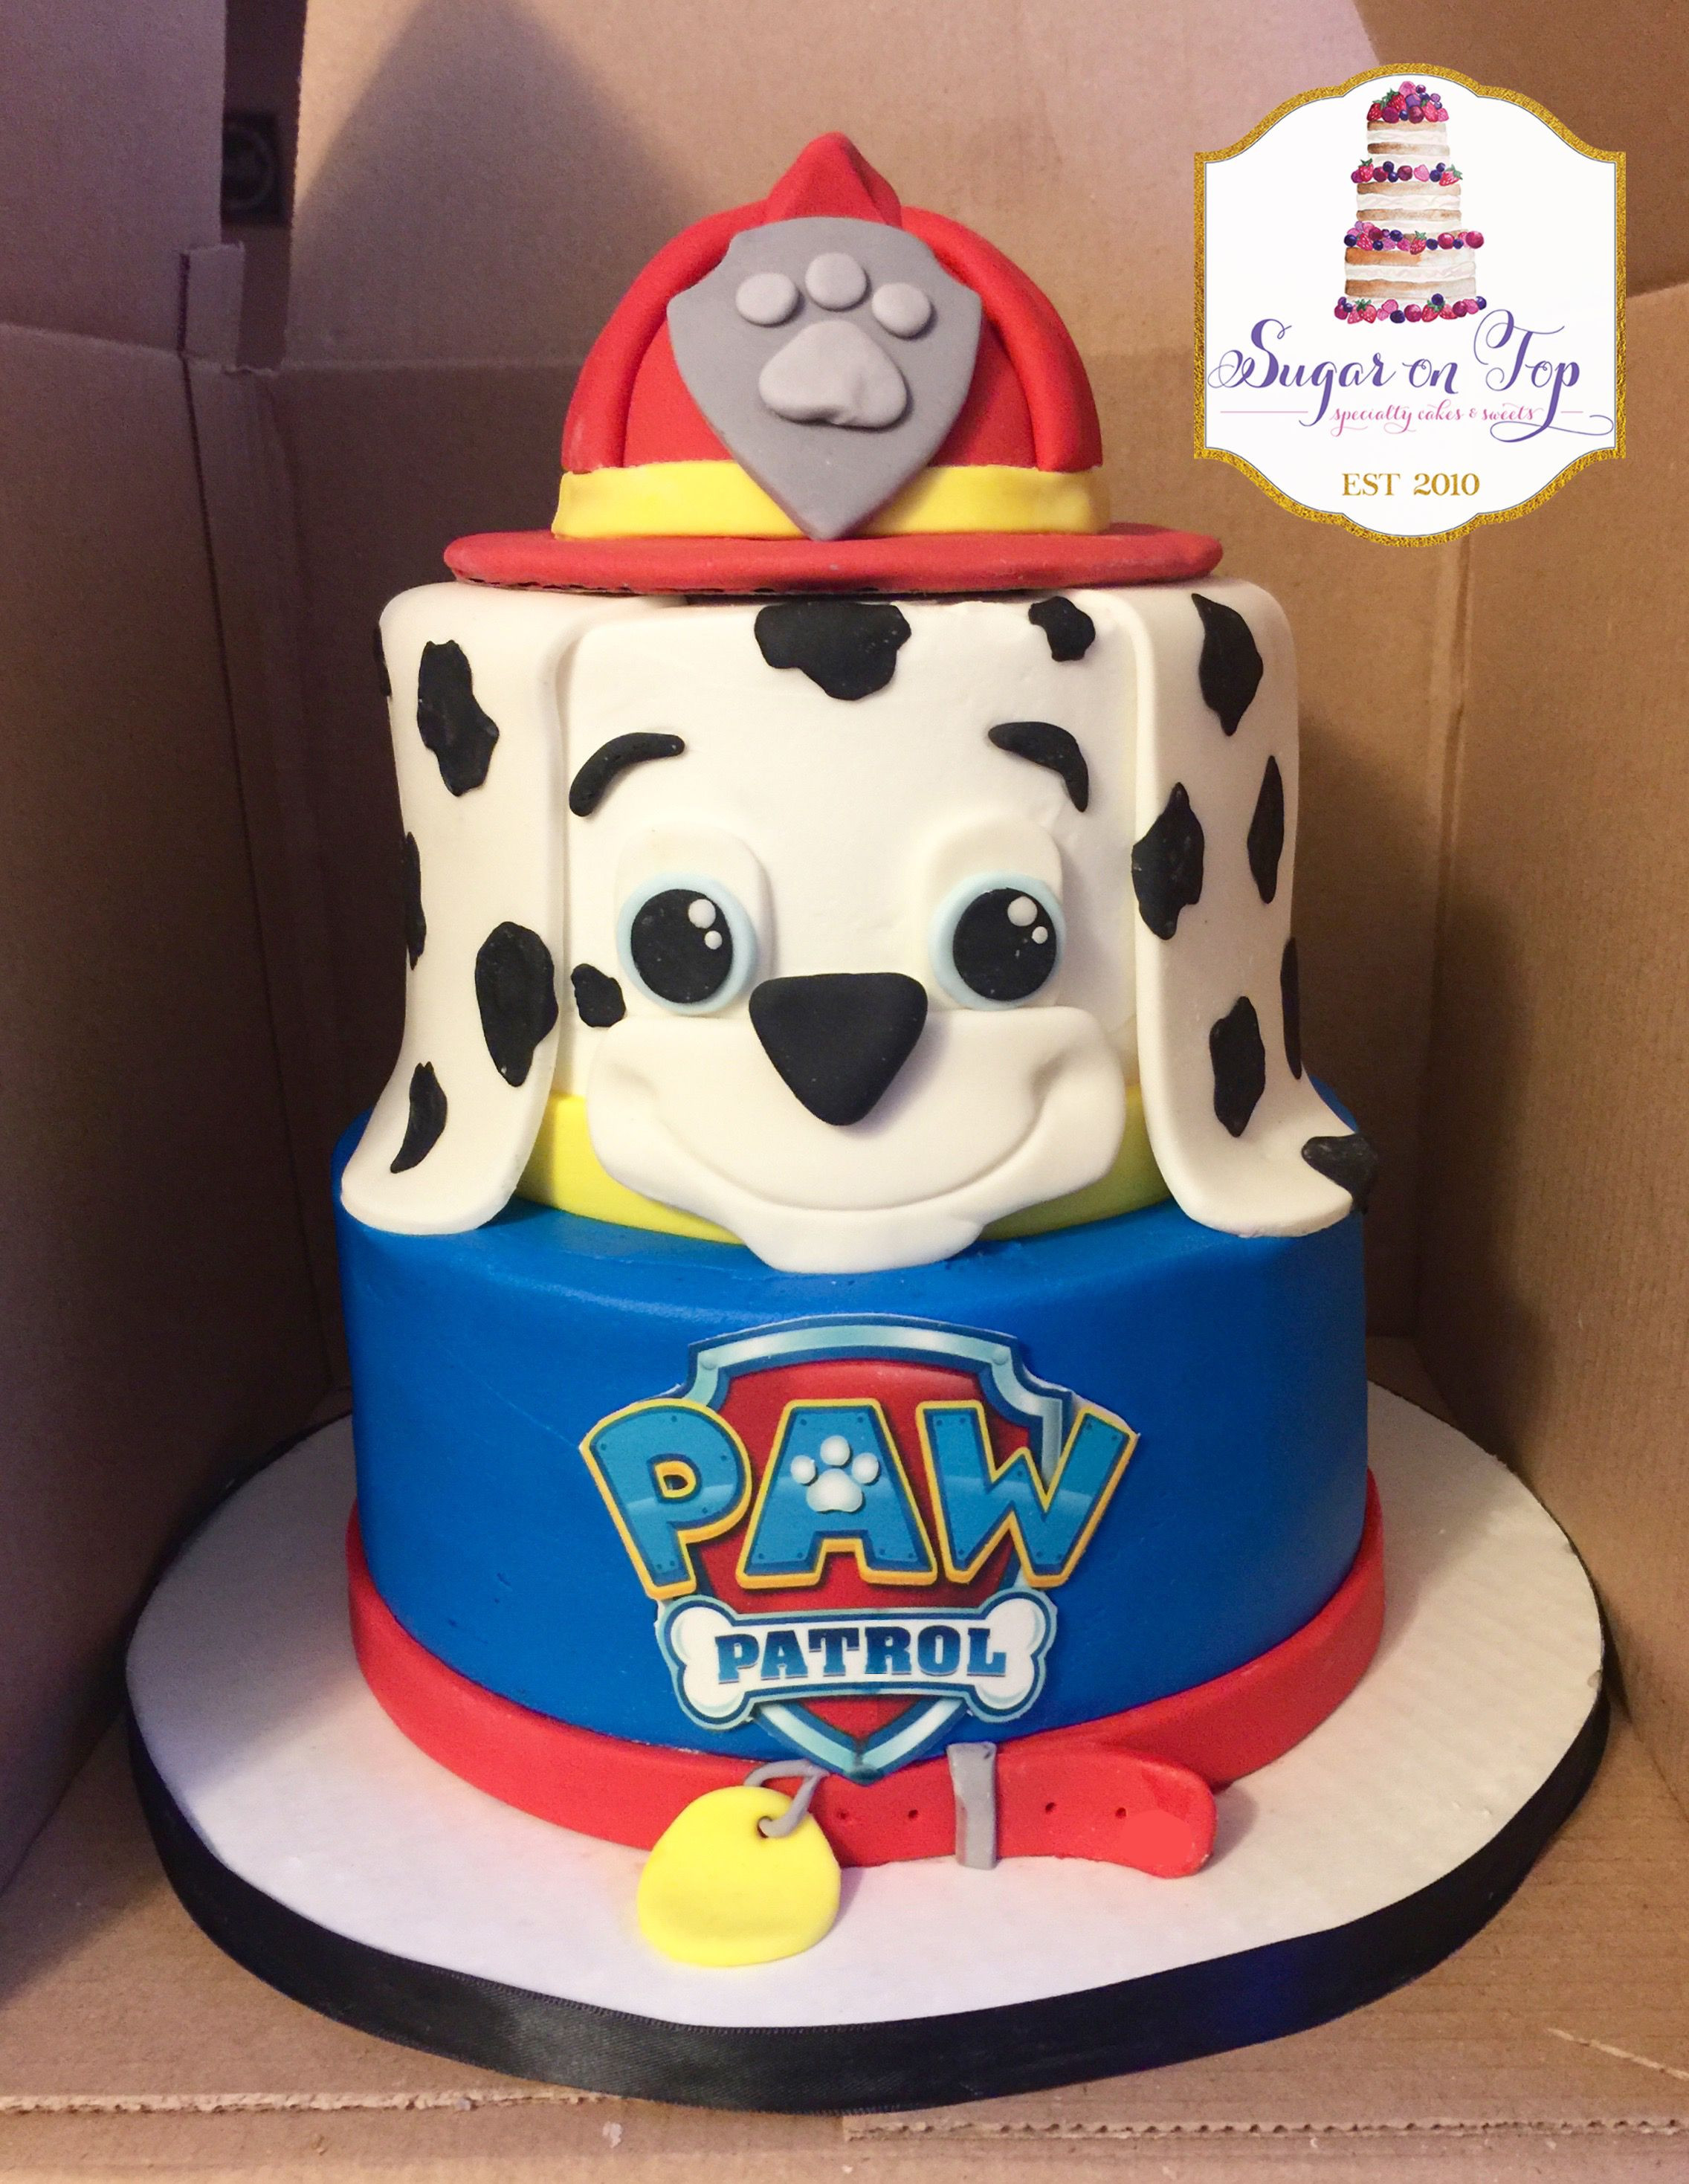 Best ideas about Paw Patrol Birthday Cake
. Save or Pin Paw patrol Marshall birthday cake Now.